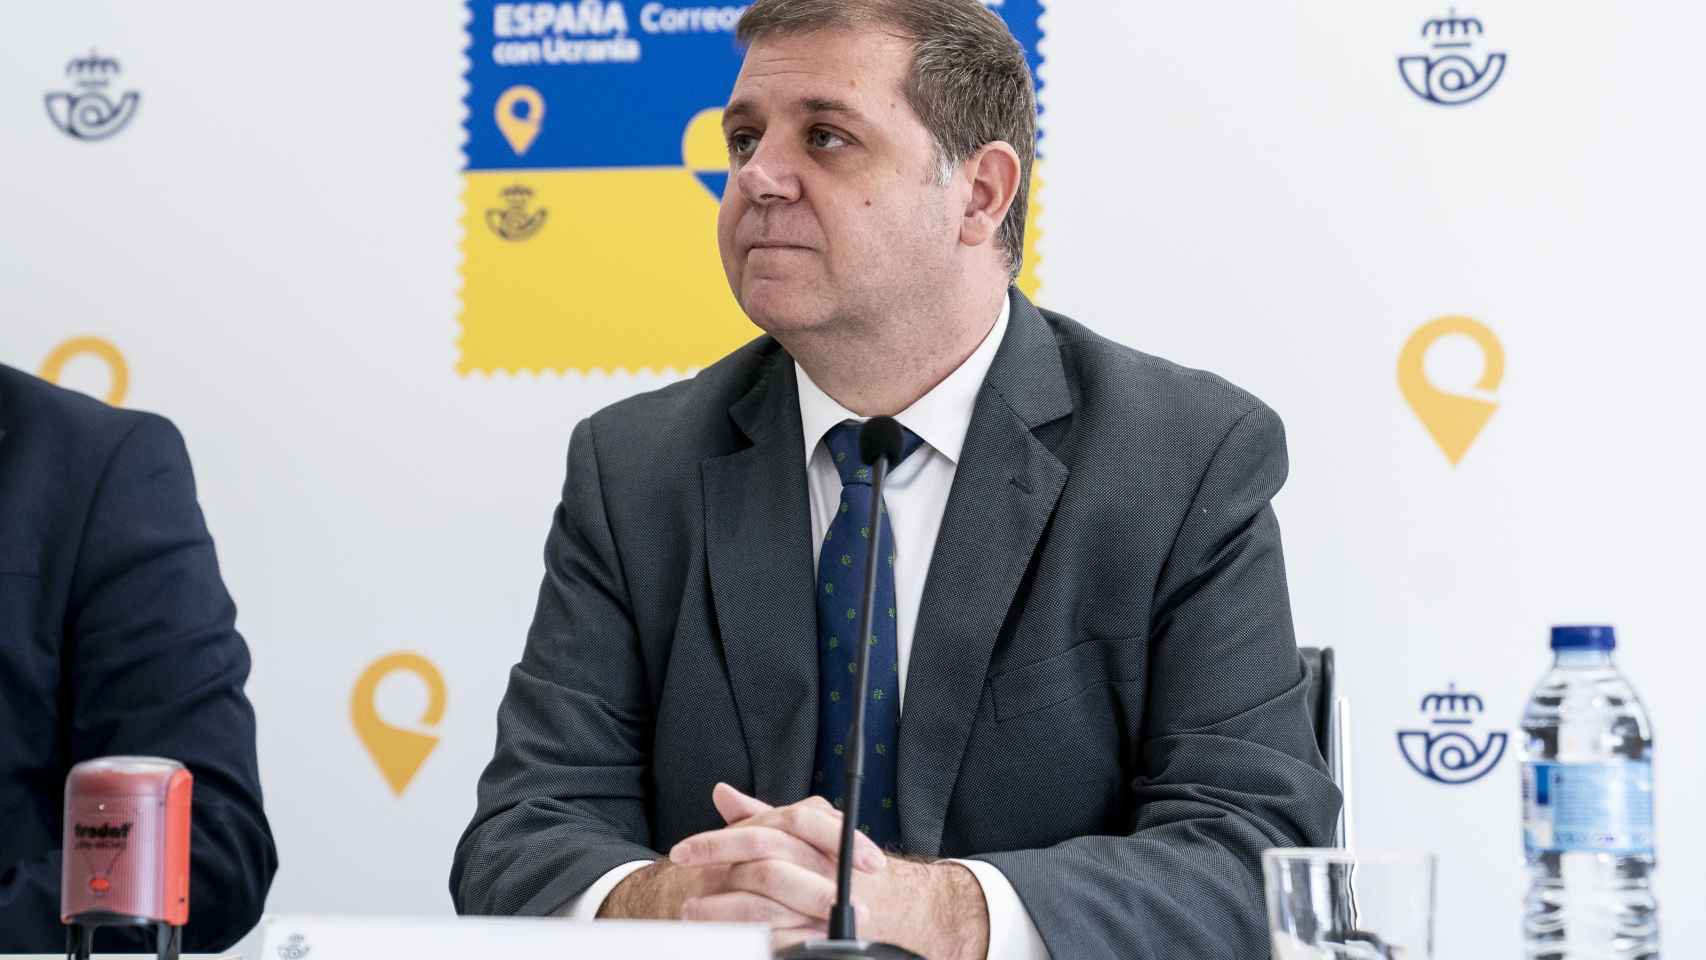 Juan Manuel Serrano, presidente de Correos.